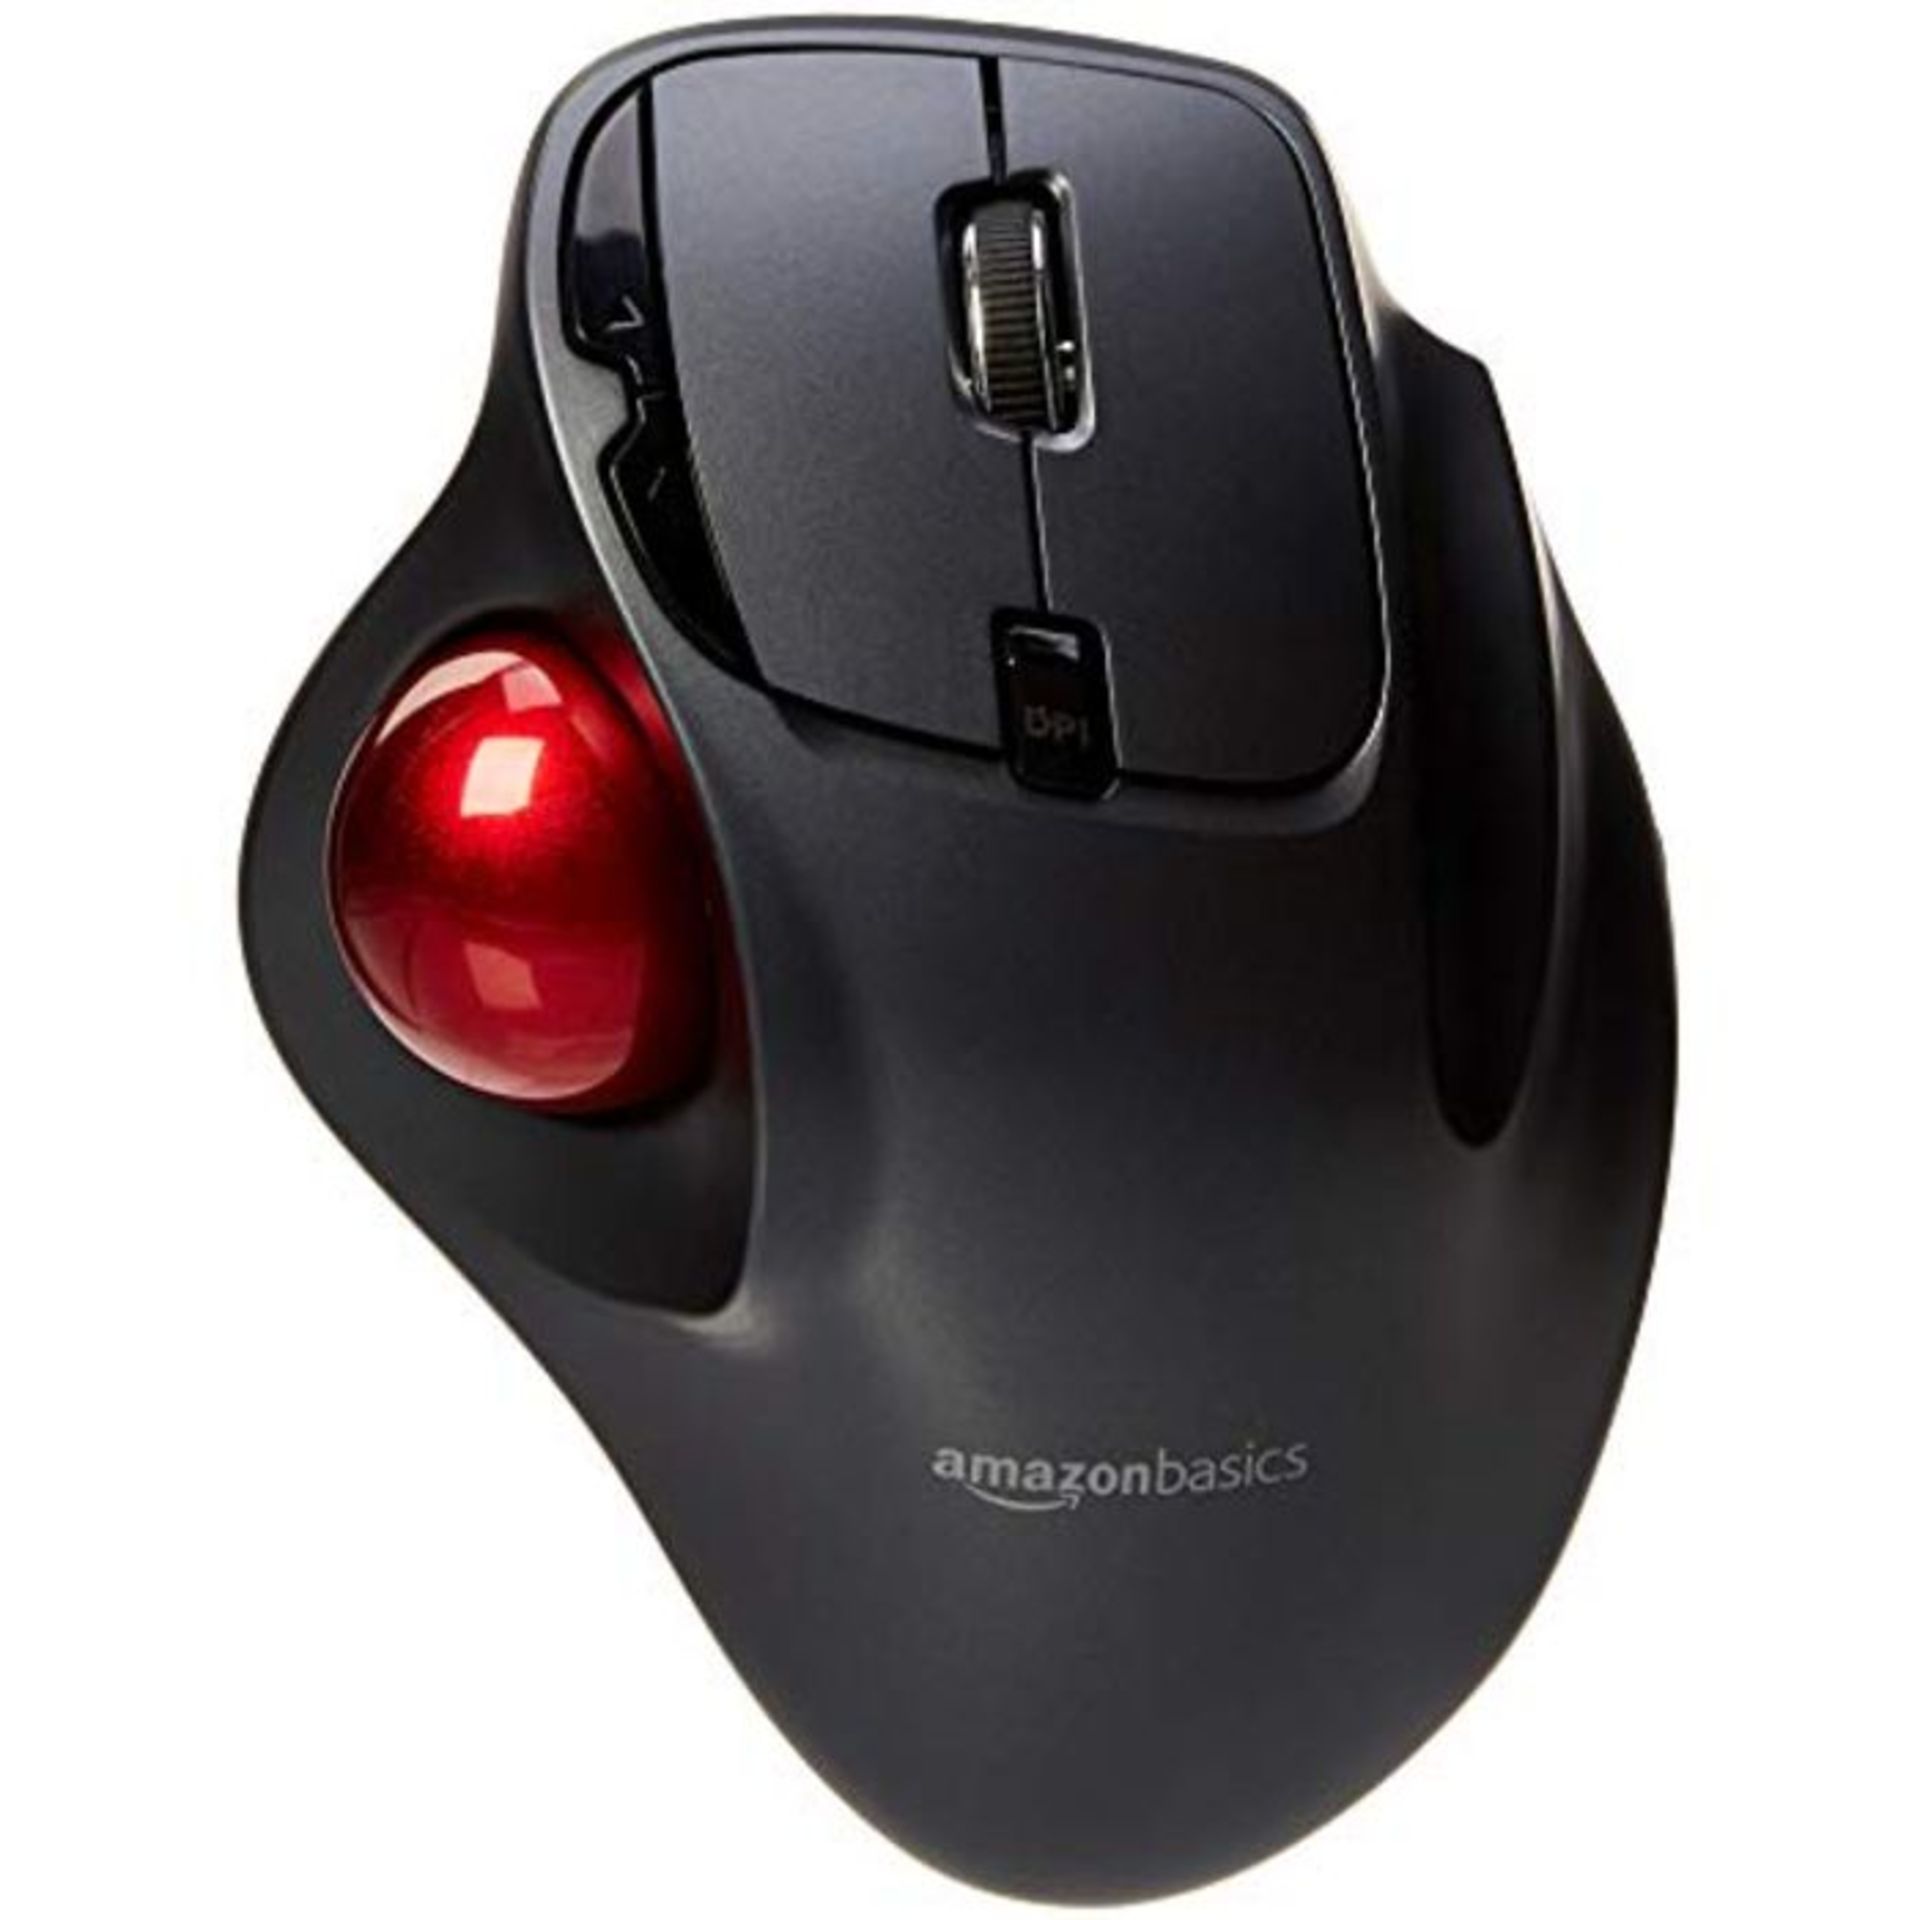 Amazon Basics Wireless Trackball Mouse